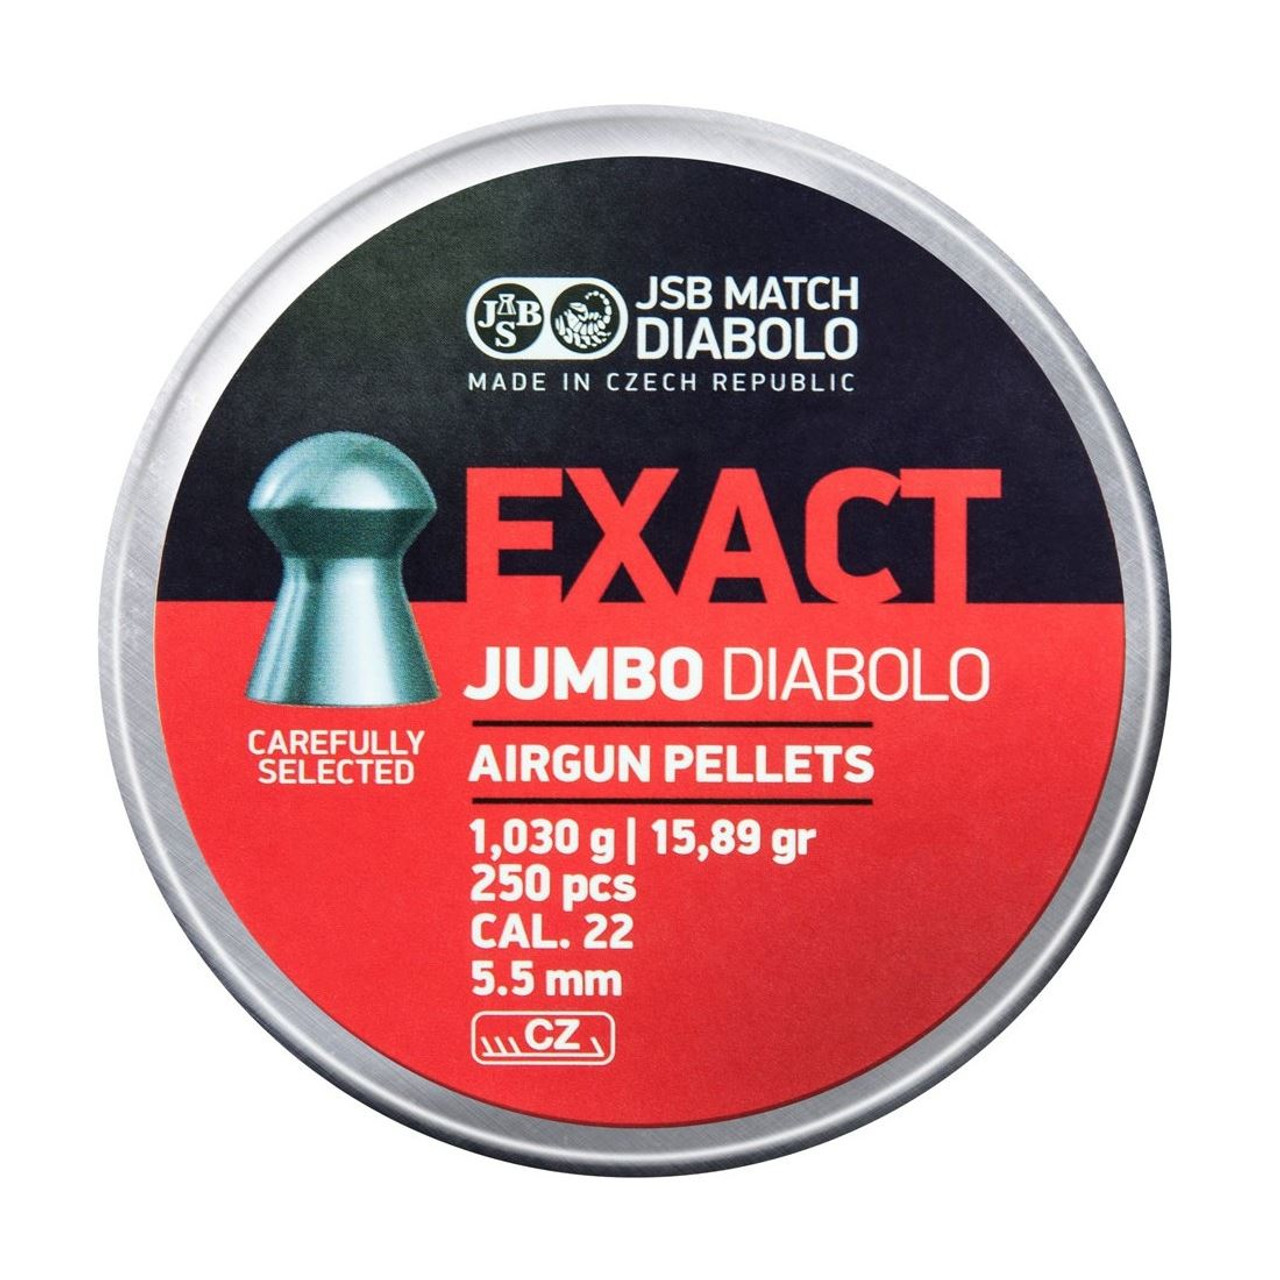 JSB Exact Jumbo Diabolo .22 5.51mm 15.89gr Airgun Pellets Tin of 500